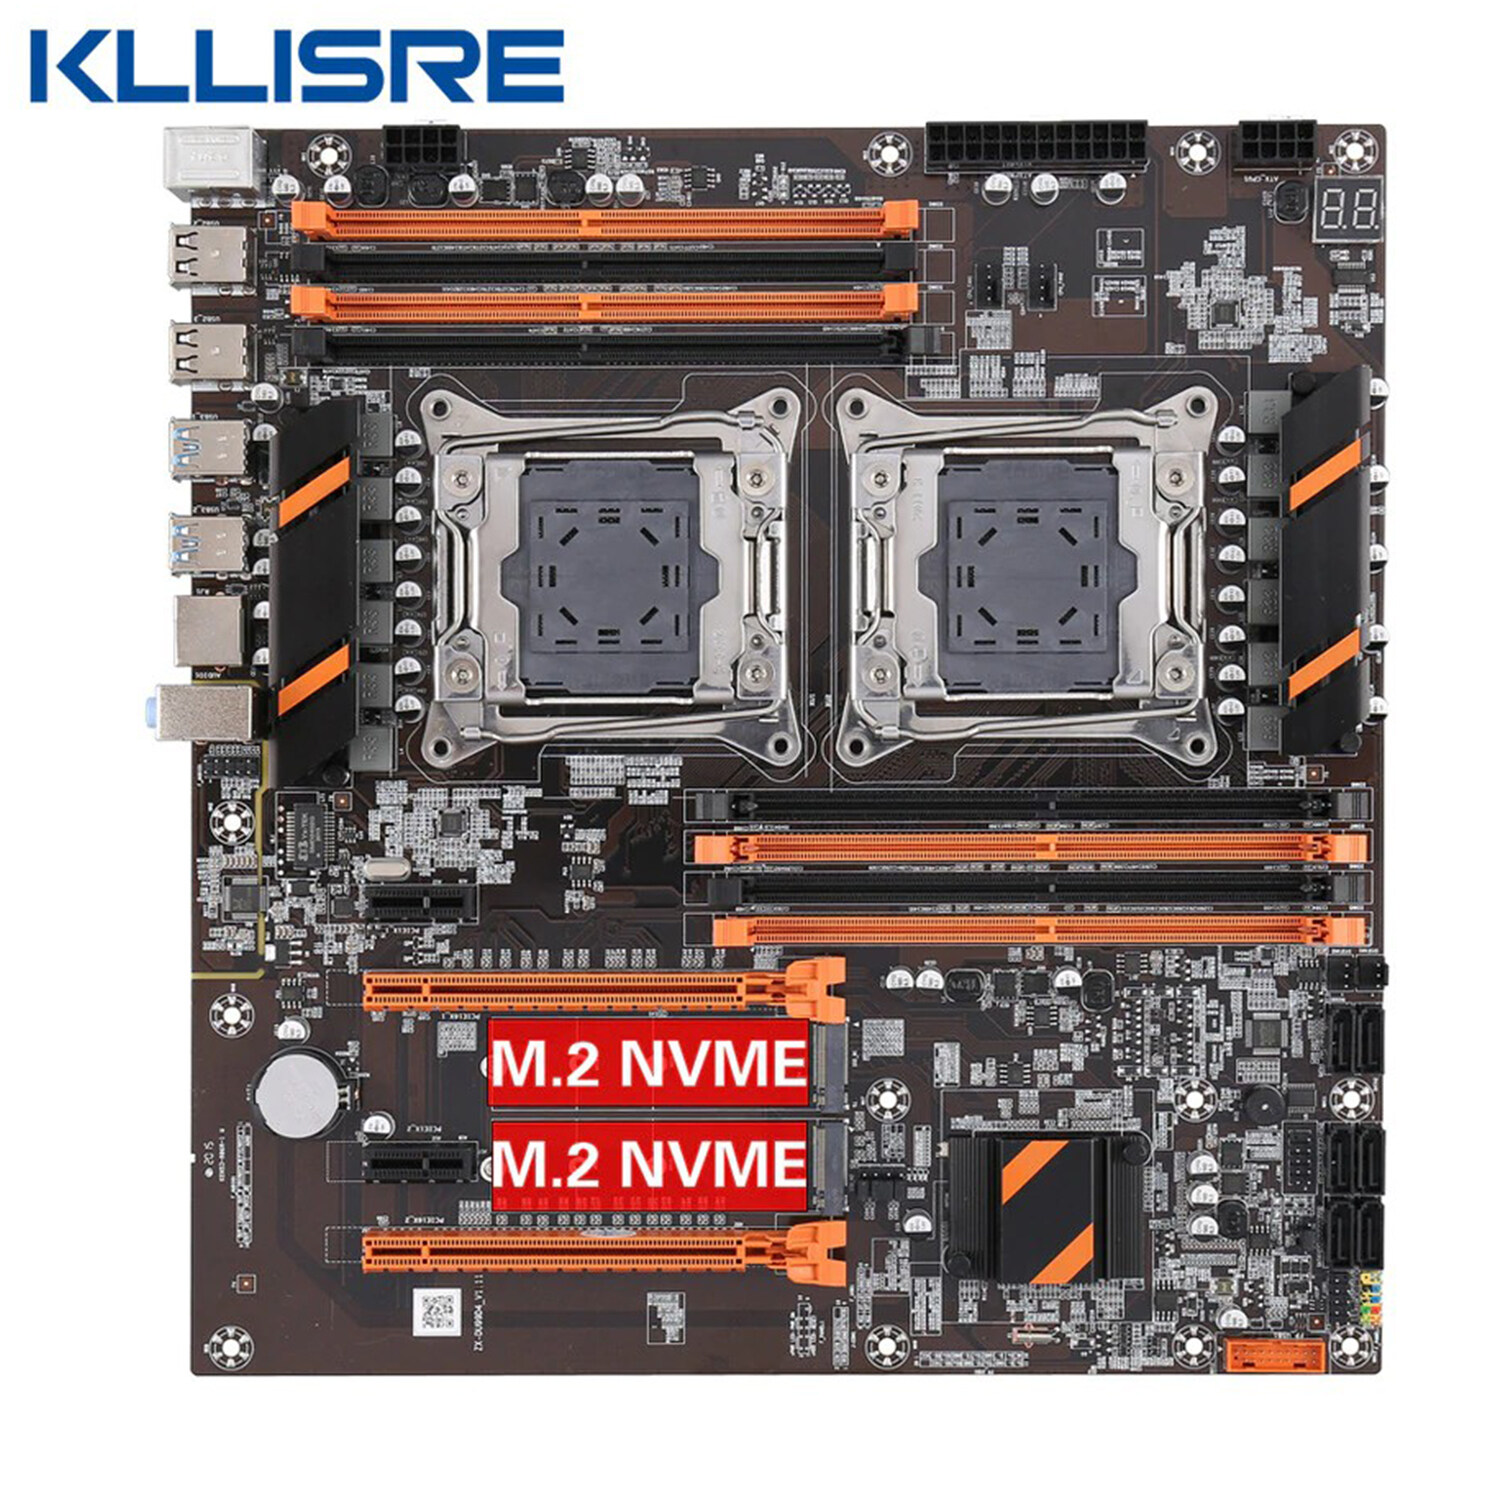 Kllisre Intel LGA2011 V3 X99 Dual CPU DDR4 M.2 NVME